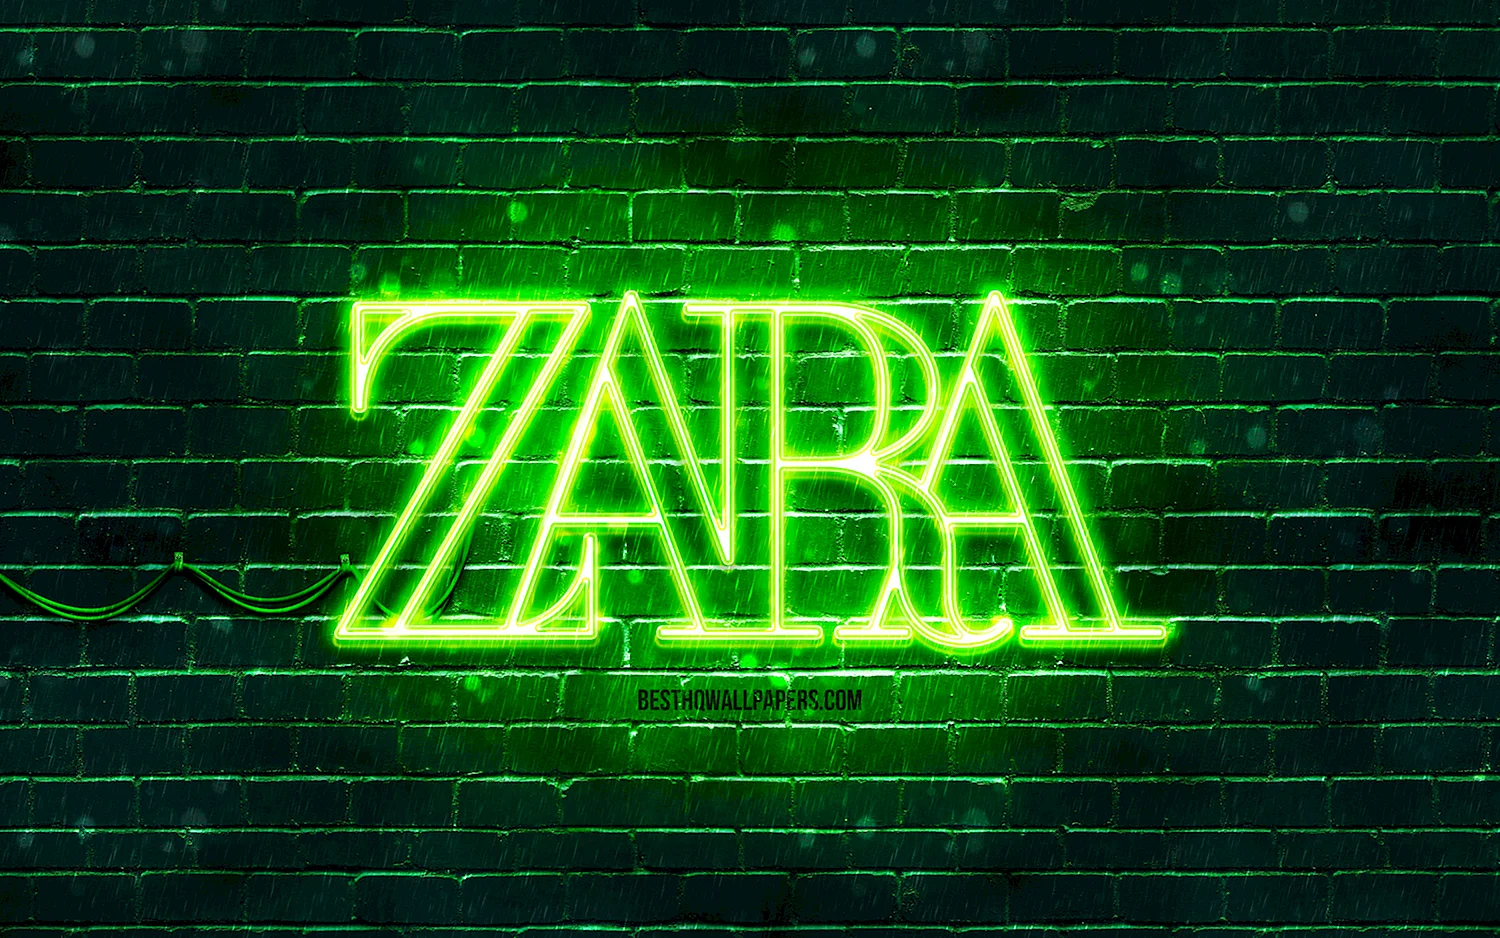 Zara logo 2021